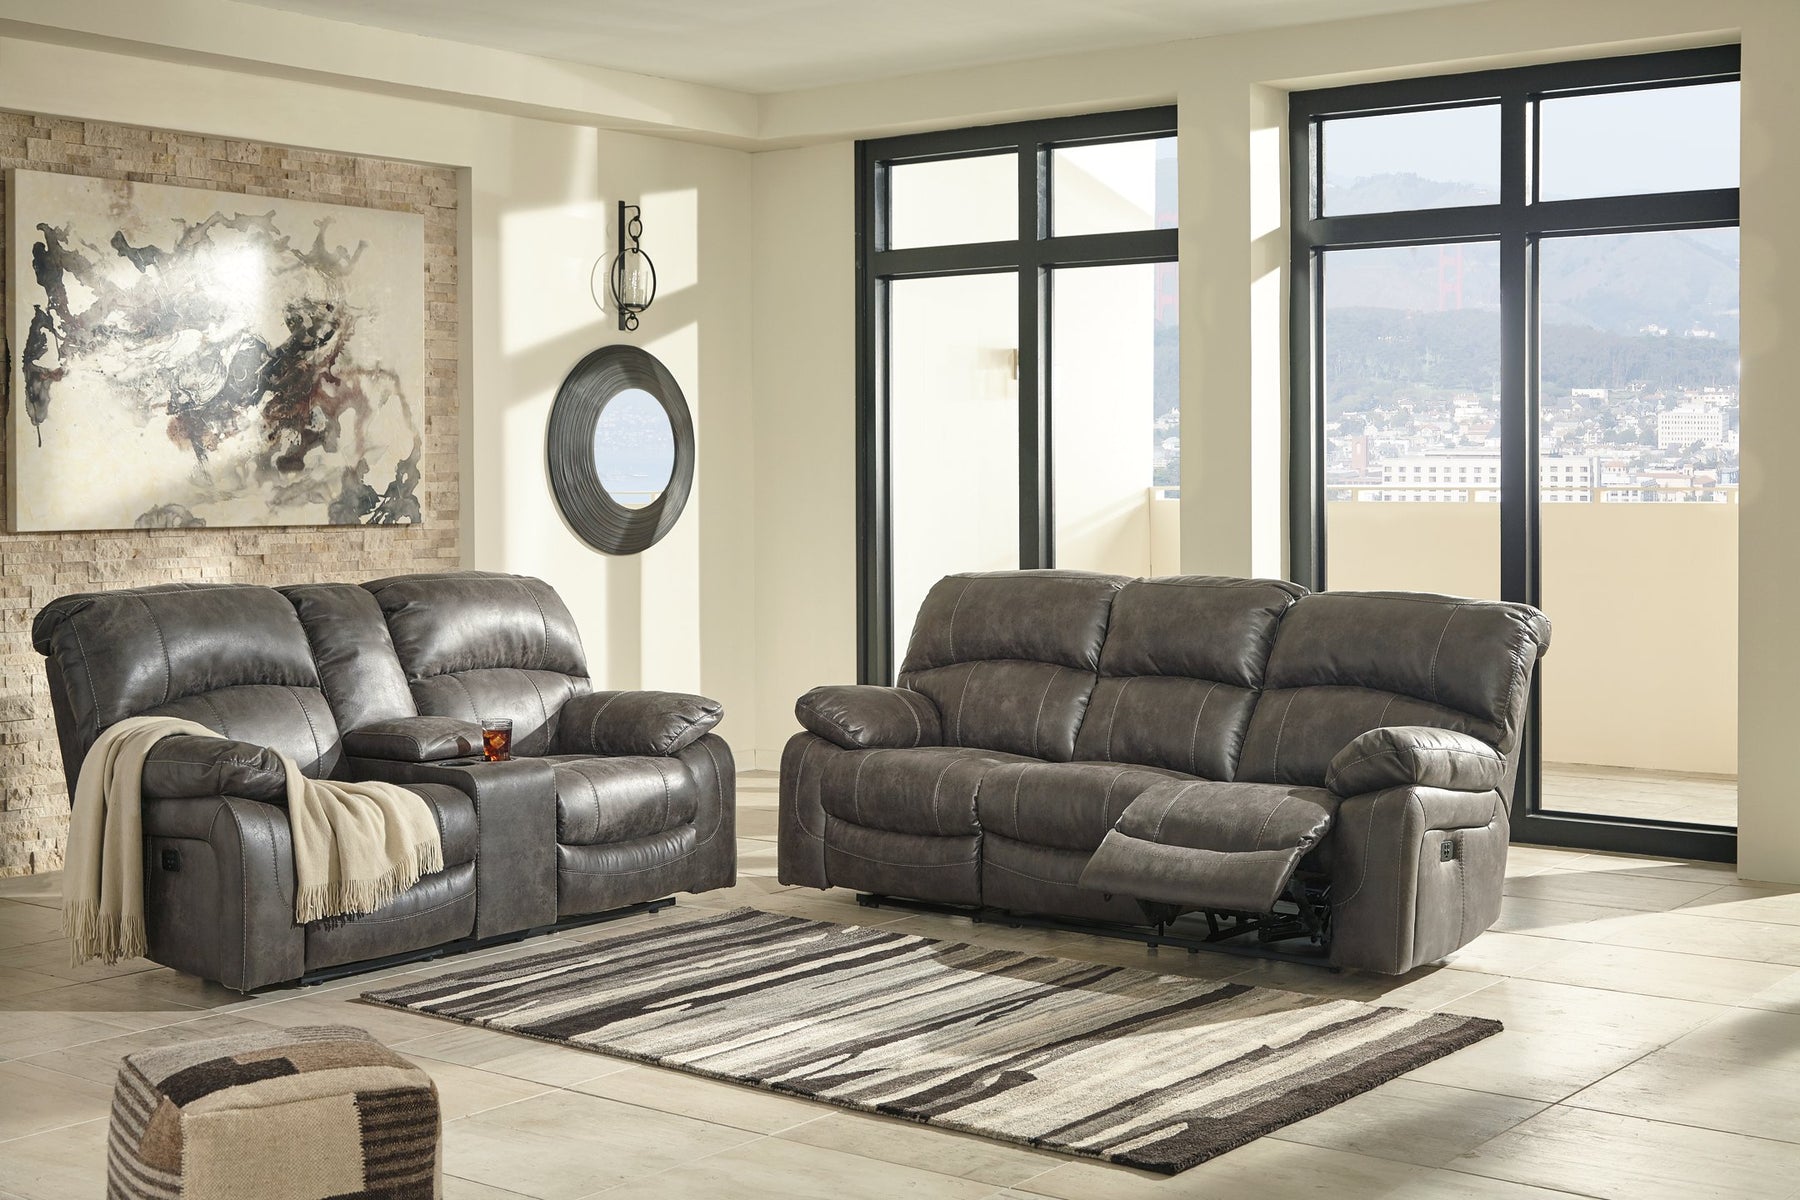 Dunwell Power Reclining Sofa - Half Price Furniture